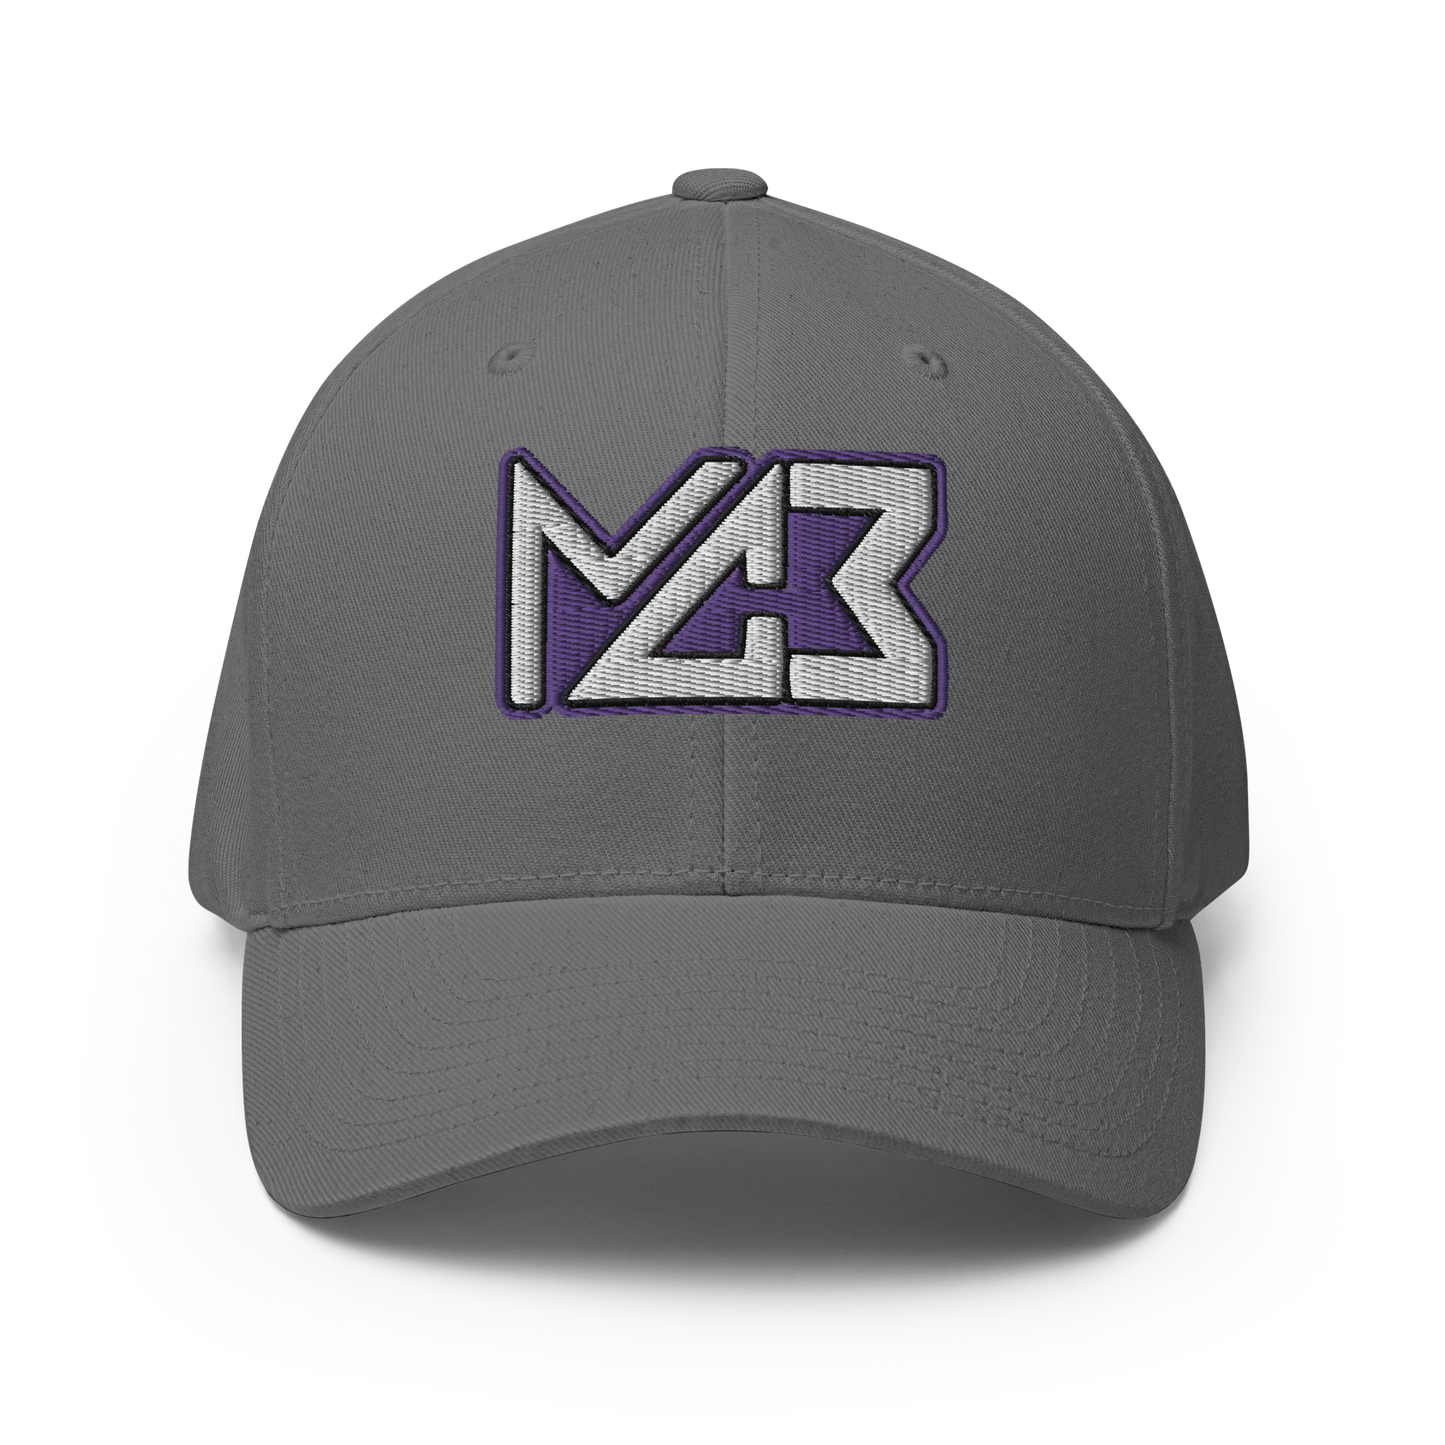 MC3Global Flex Fit Hat